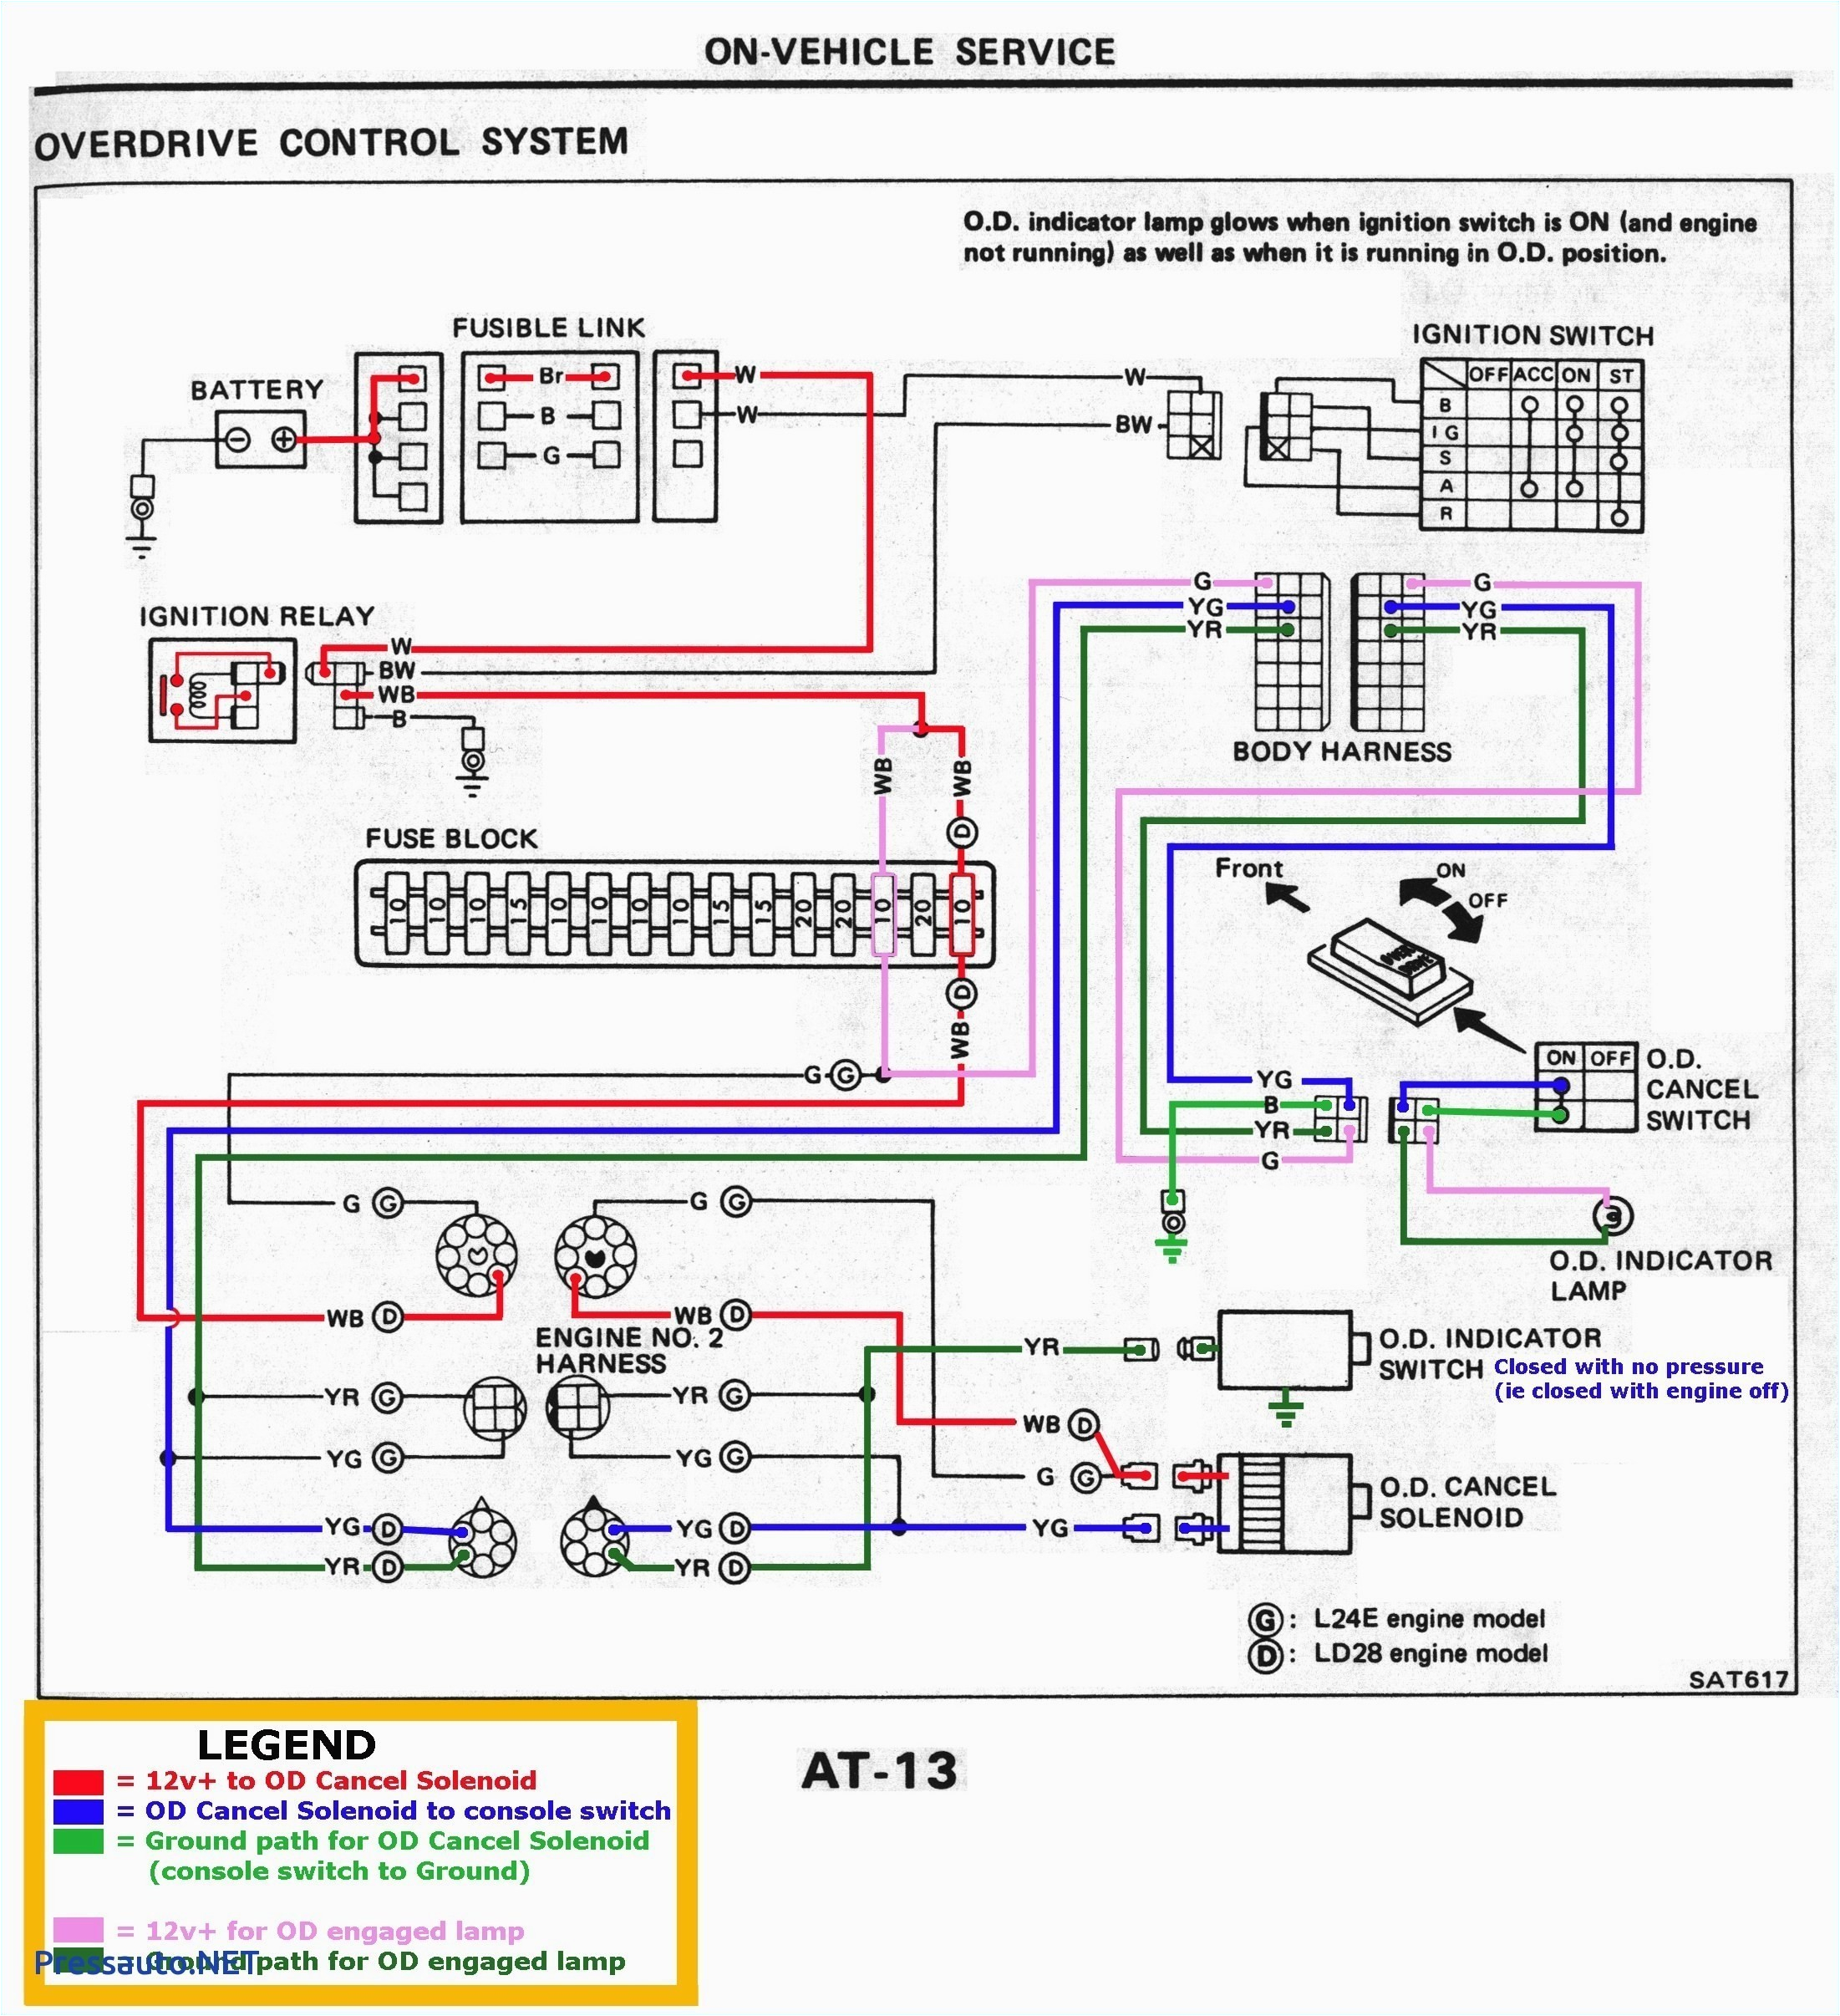 ktm ac wiring diagrams electrical schematic wiring diagramktm electrical wiring diagrams schema wiring diagram ktm ac